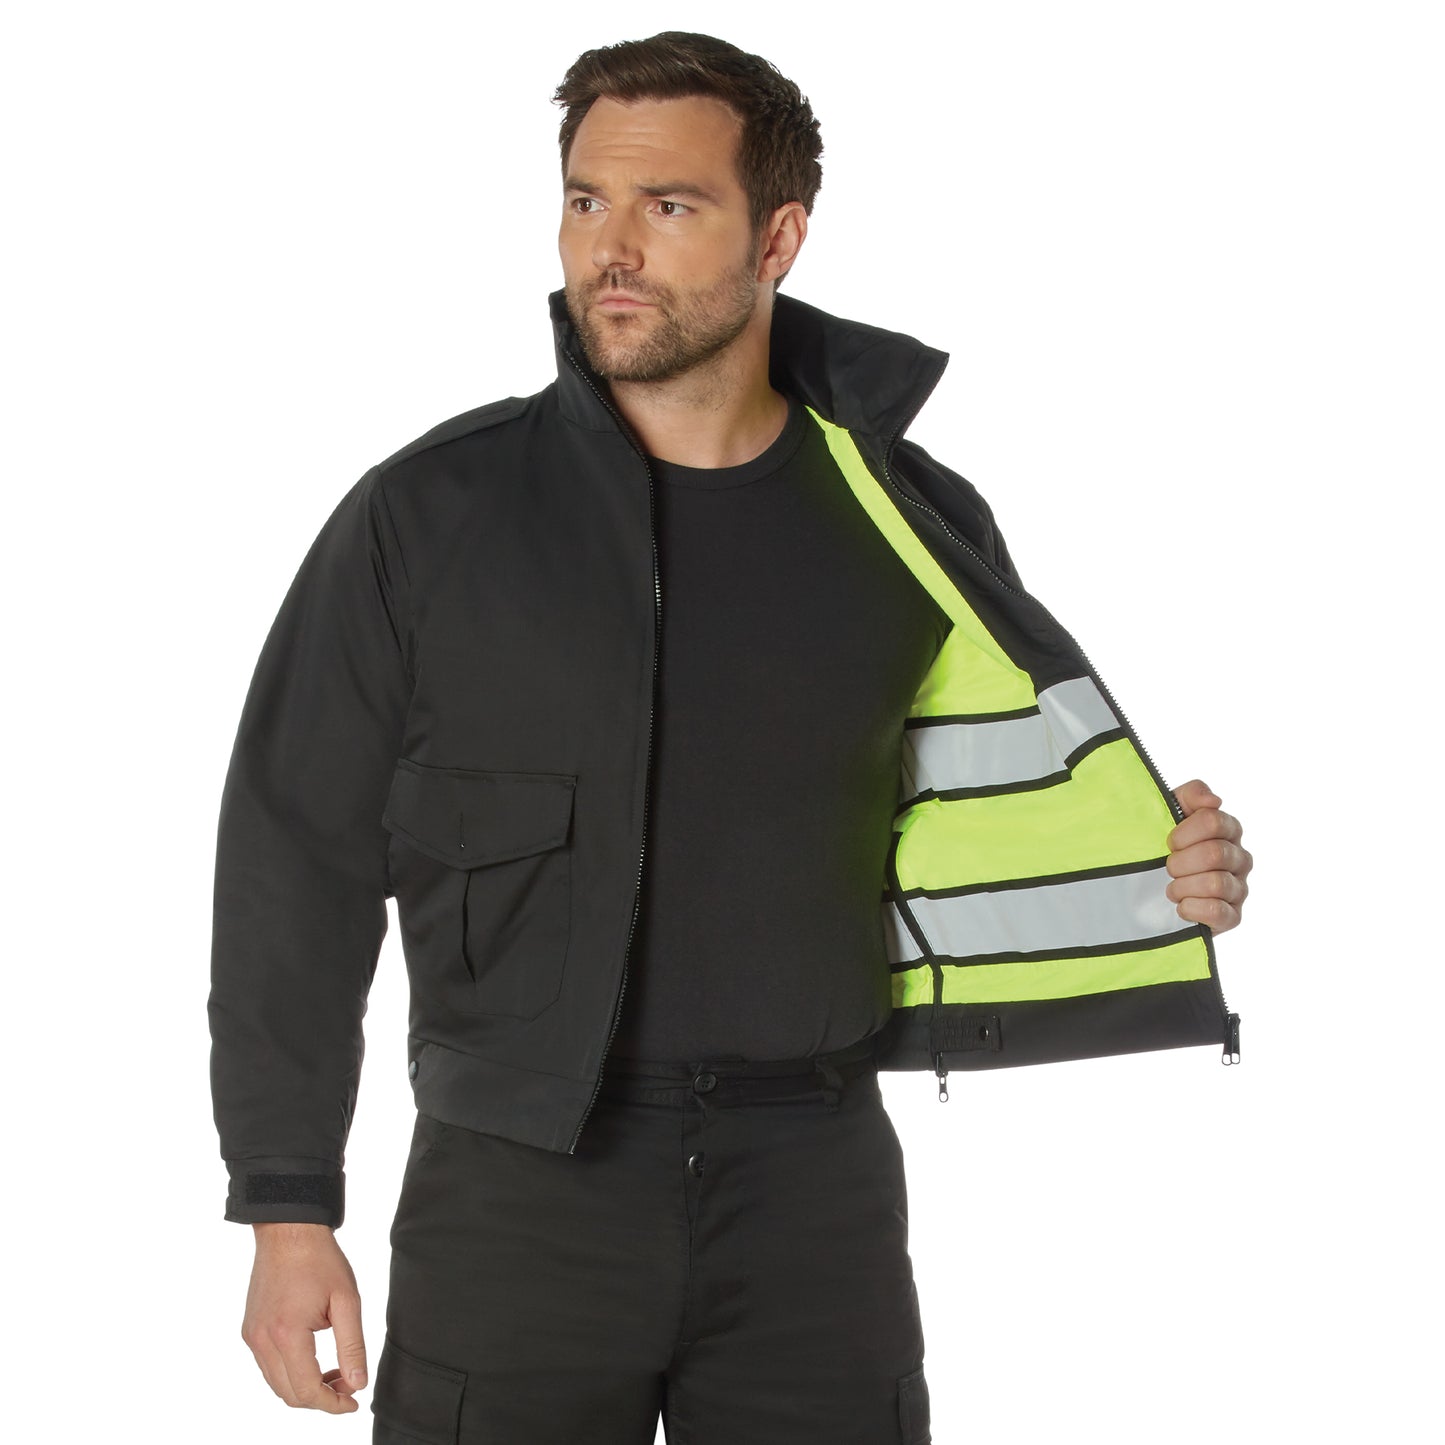 Rothco Reversible Hi-visibility Uniform Jacket